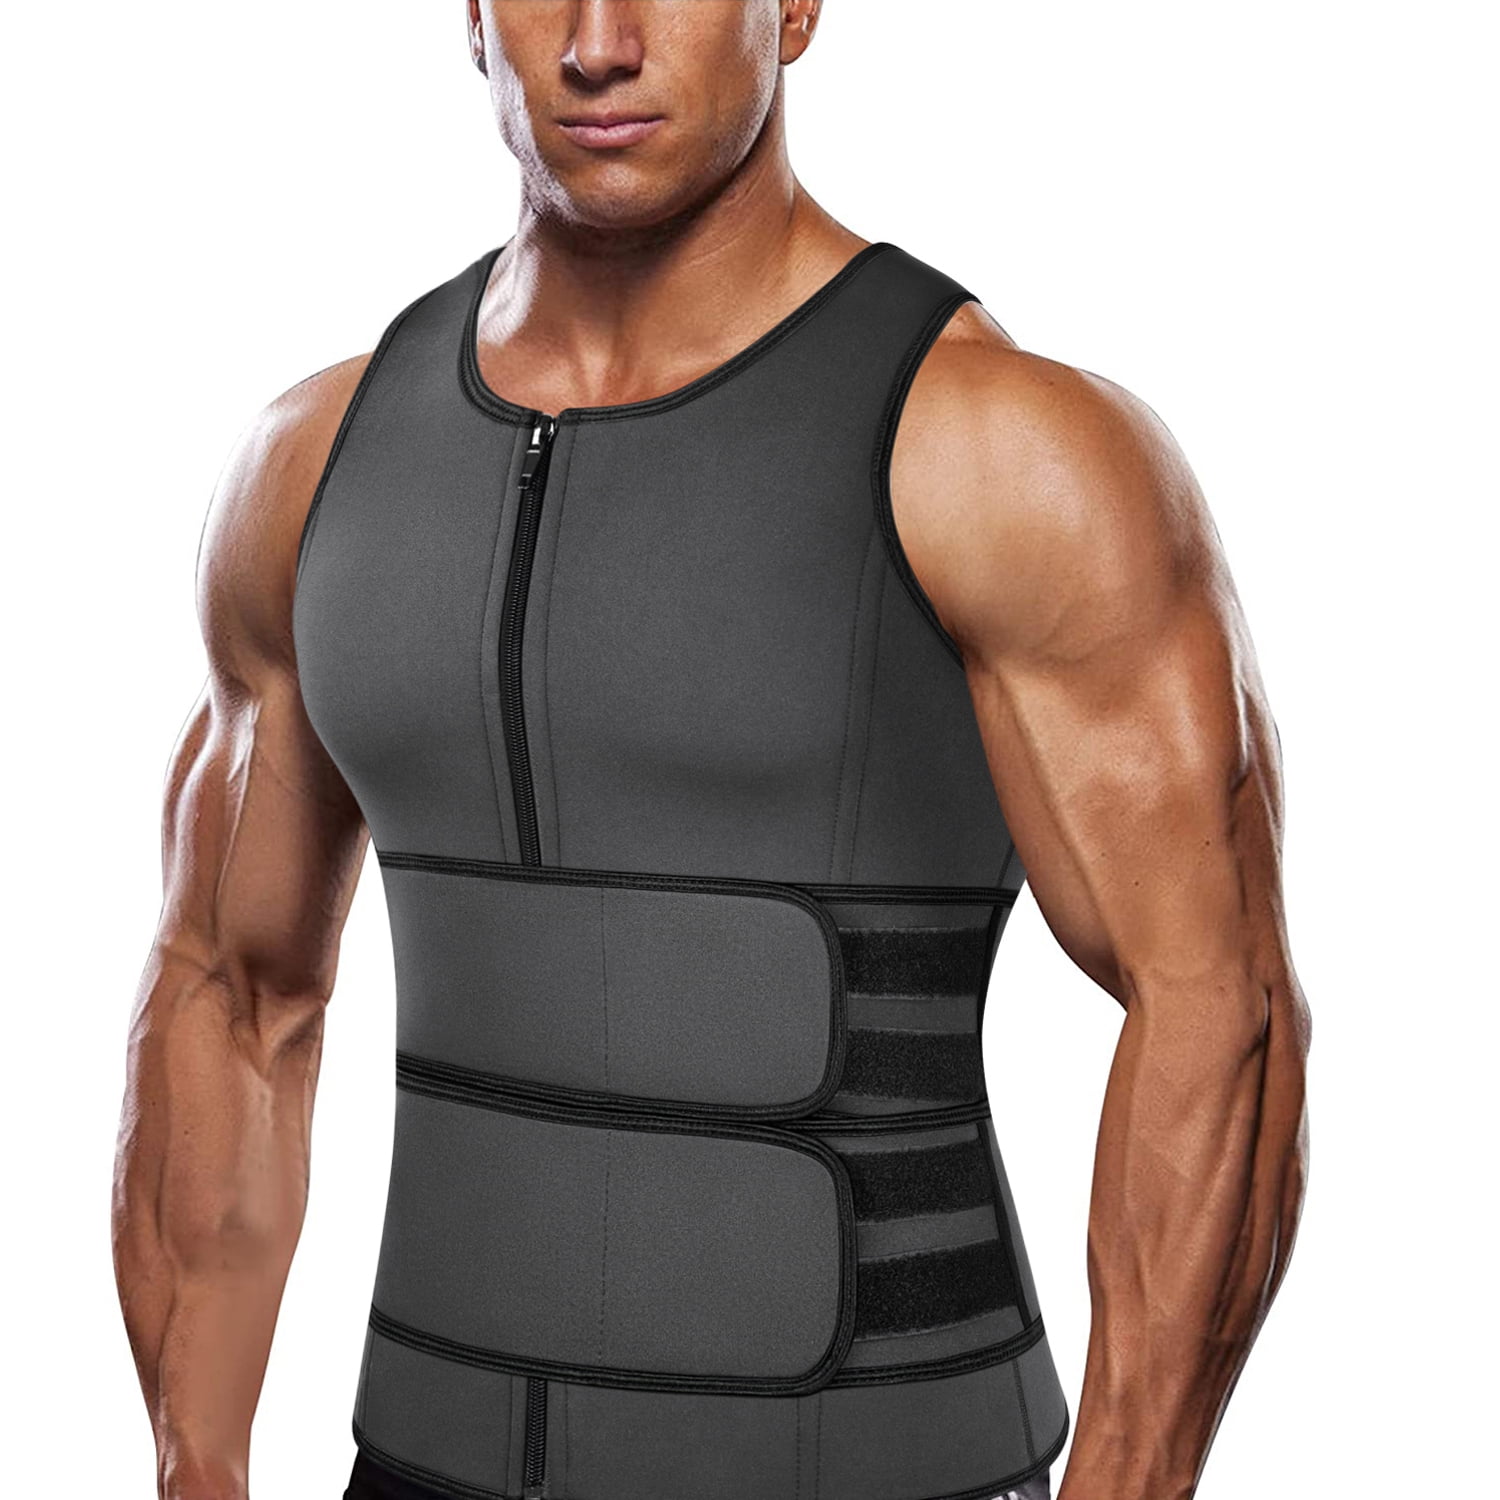 Sauna Suit Tank Top for Men Workout Vest Gym Shirt Shaper Neoprene Help Sweat